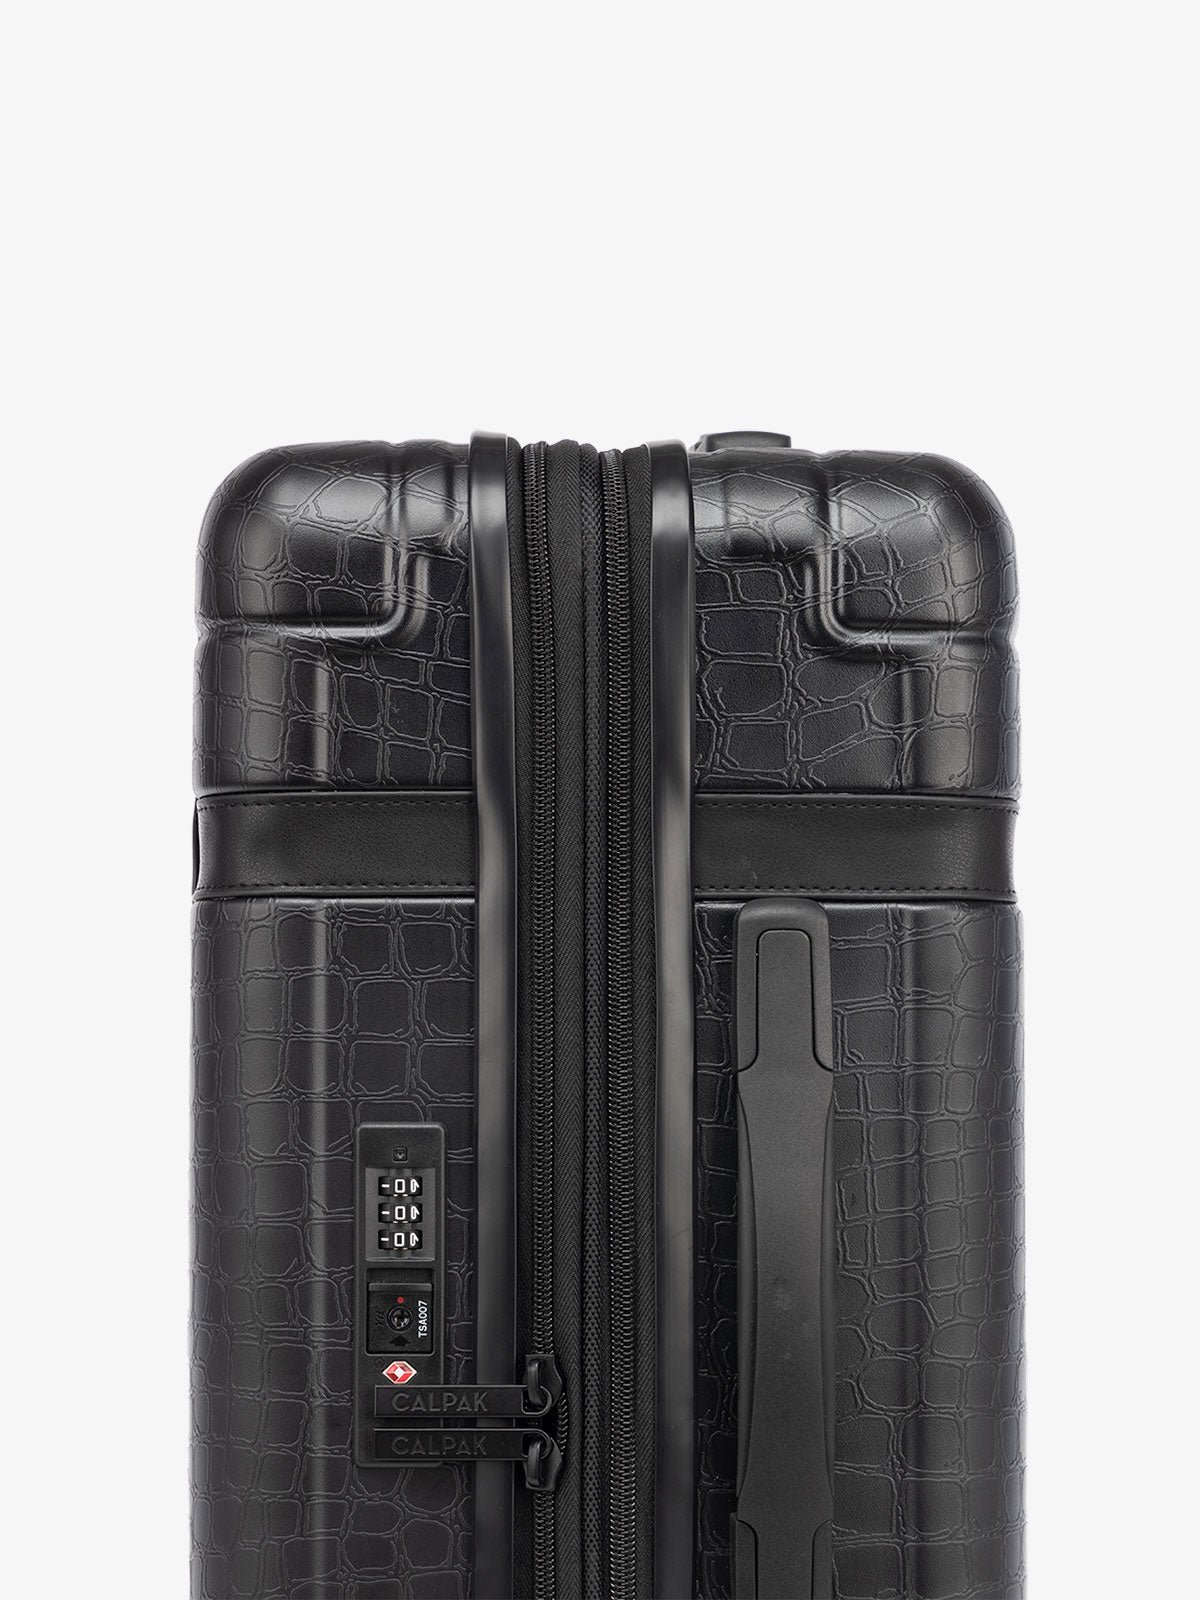 Trnk black 2-piece luggage set with TSA approved locks